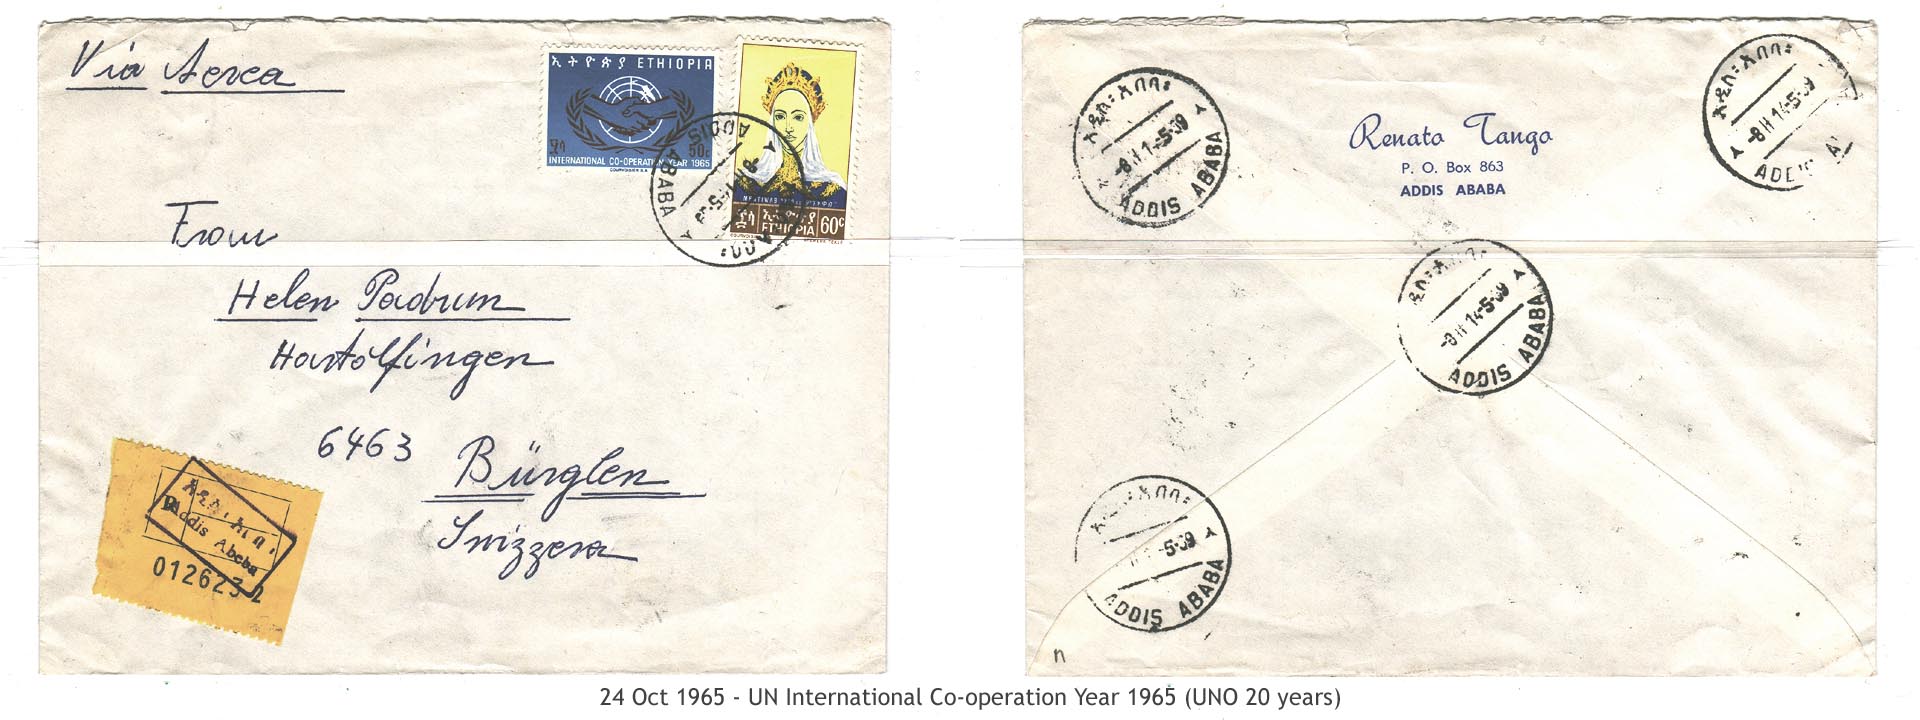 19651024 – UN International Co-operation Year 1965 (UNO 20 years)